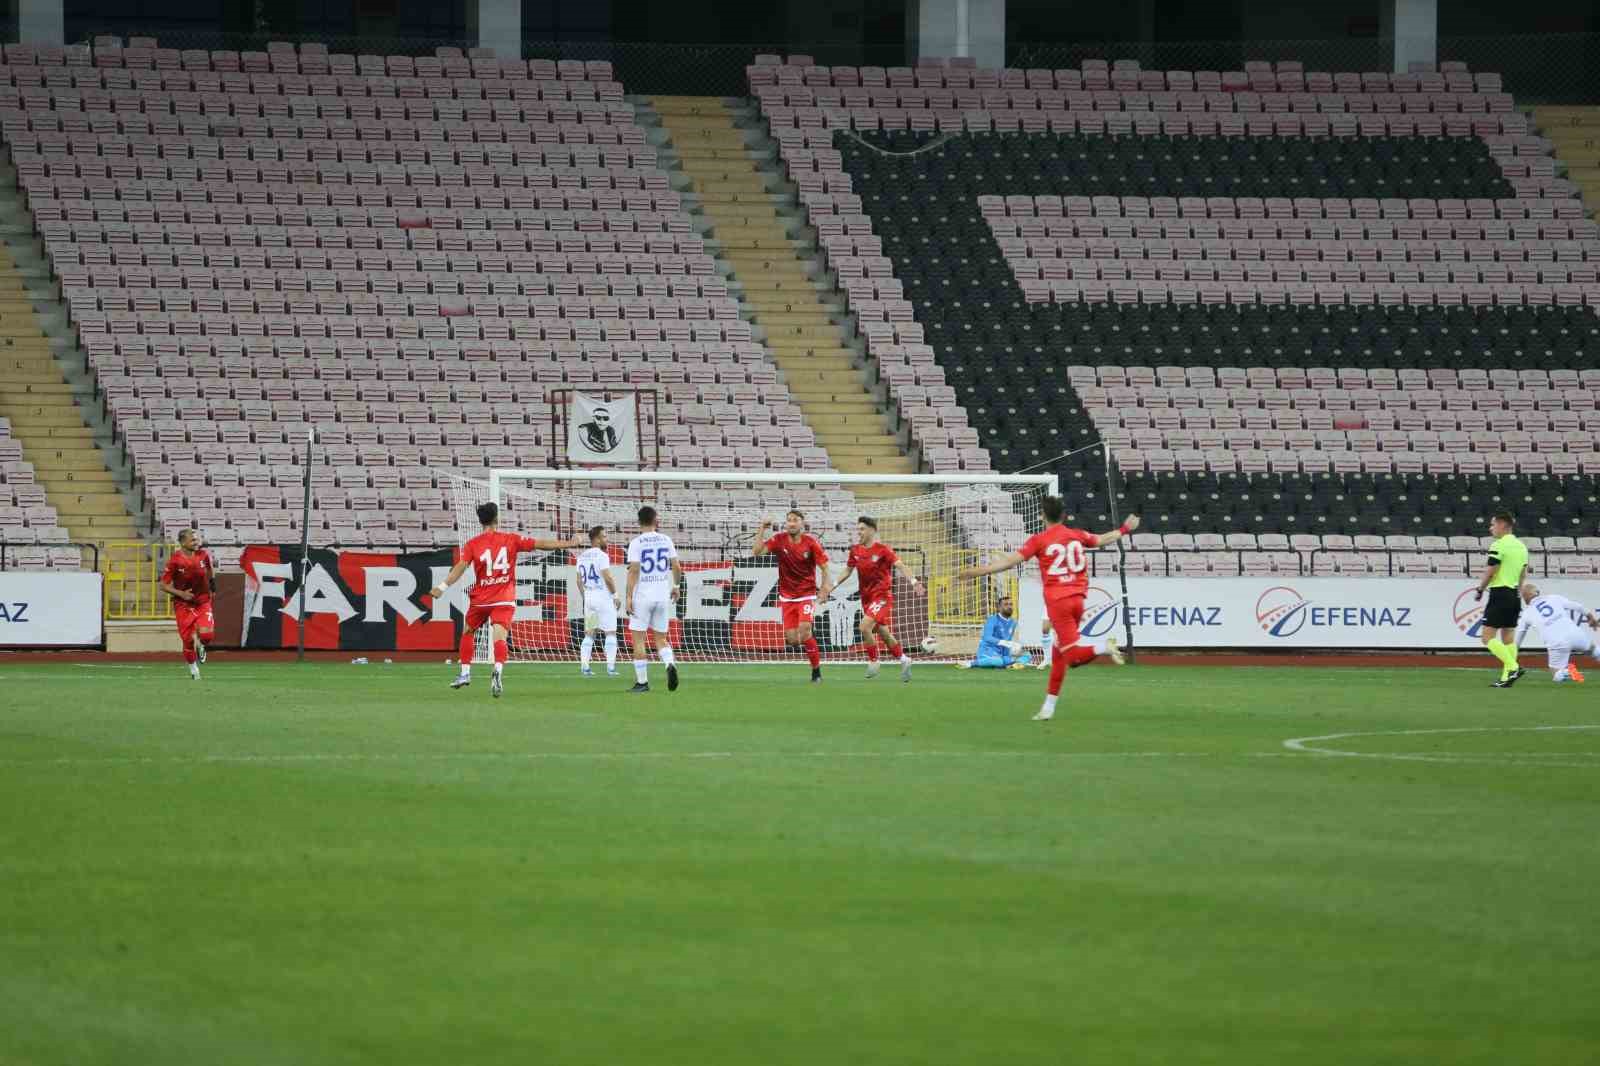 TFF 3. Lig 2. Grup Play Off: Anadolu Üniversitesi: 1 - Efeler 09 SFK: 2
